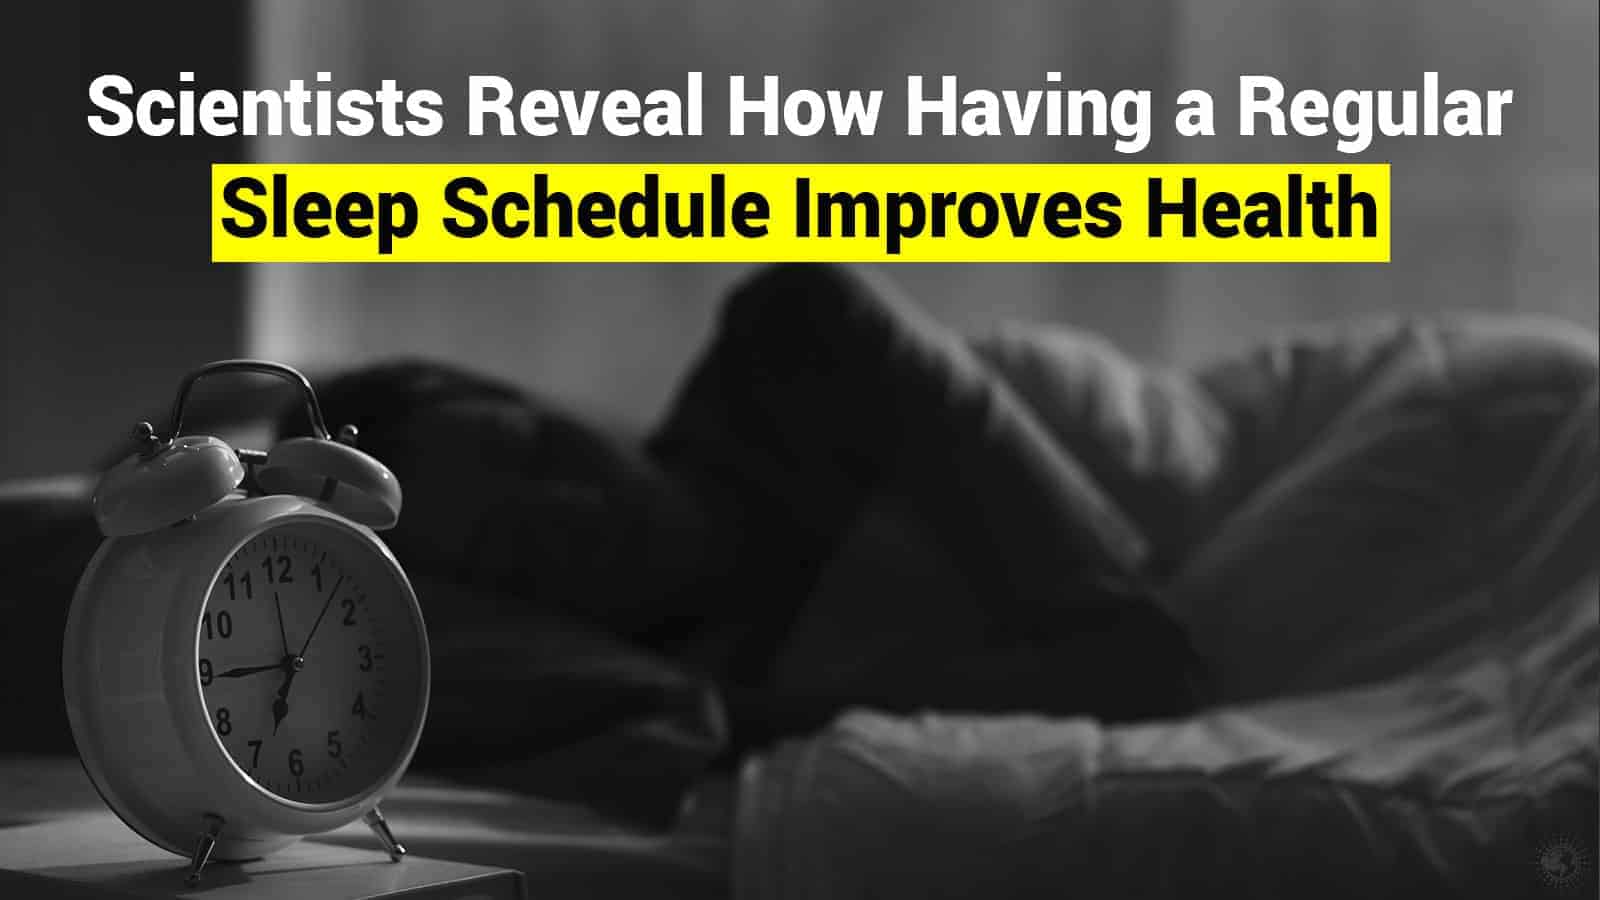 Scientists Reveal How Having a Regular Sleep Schedule Improves Health